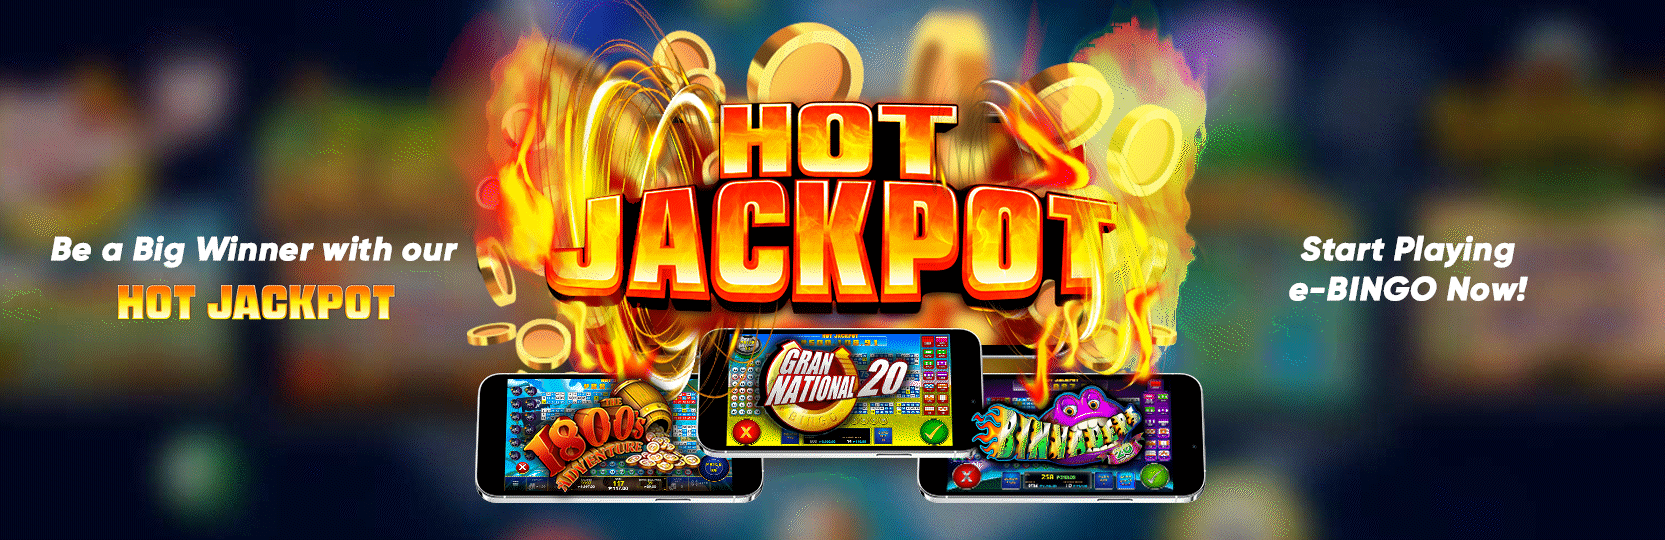 Hot Jackpot 1665x540 en 1